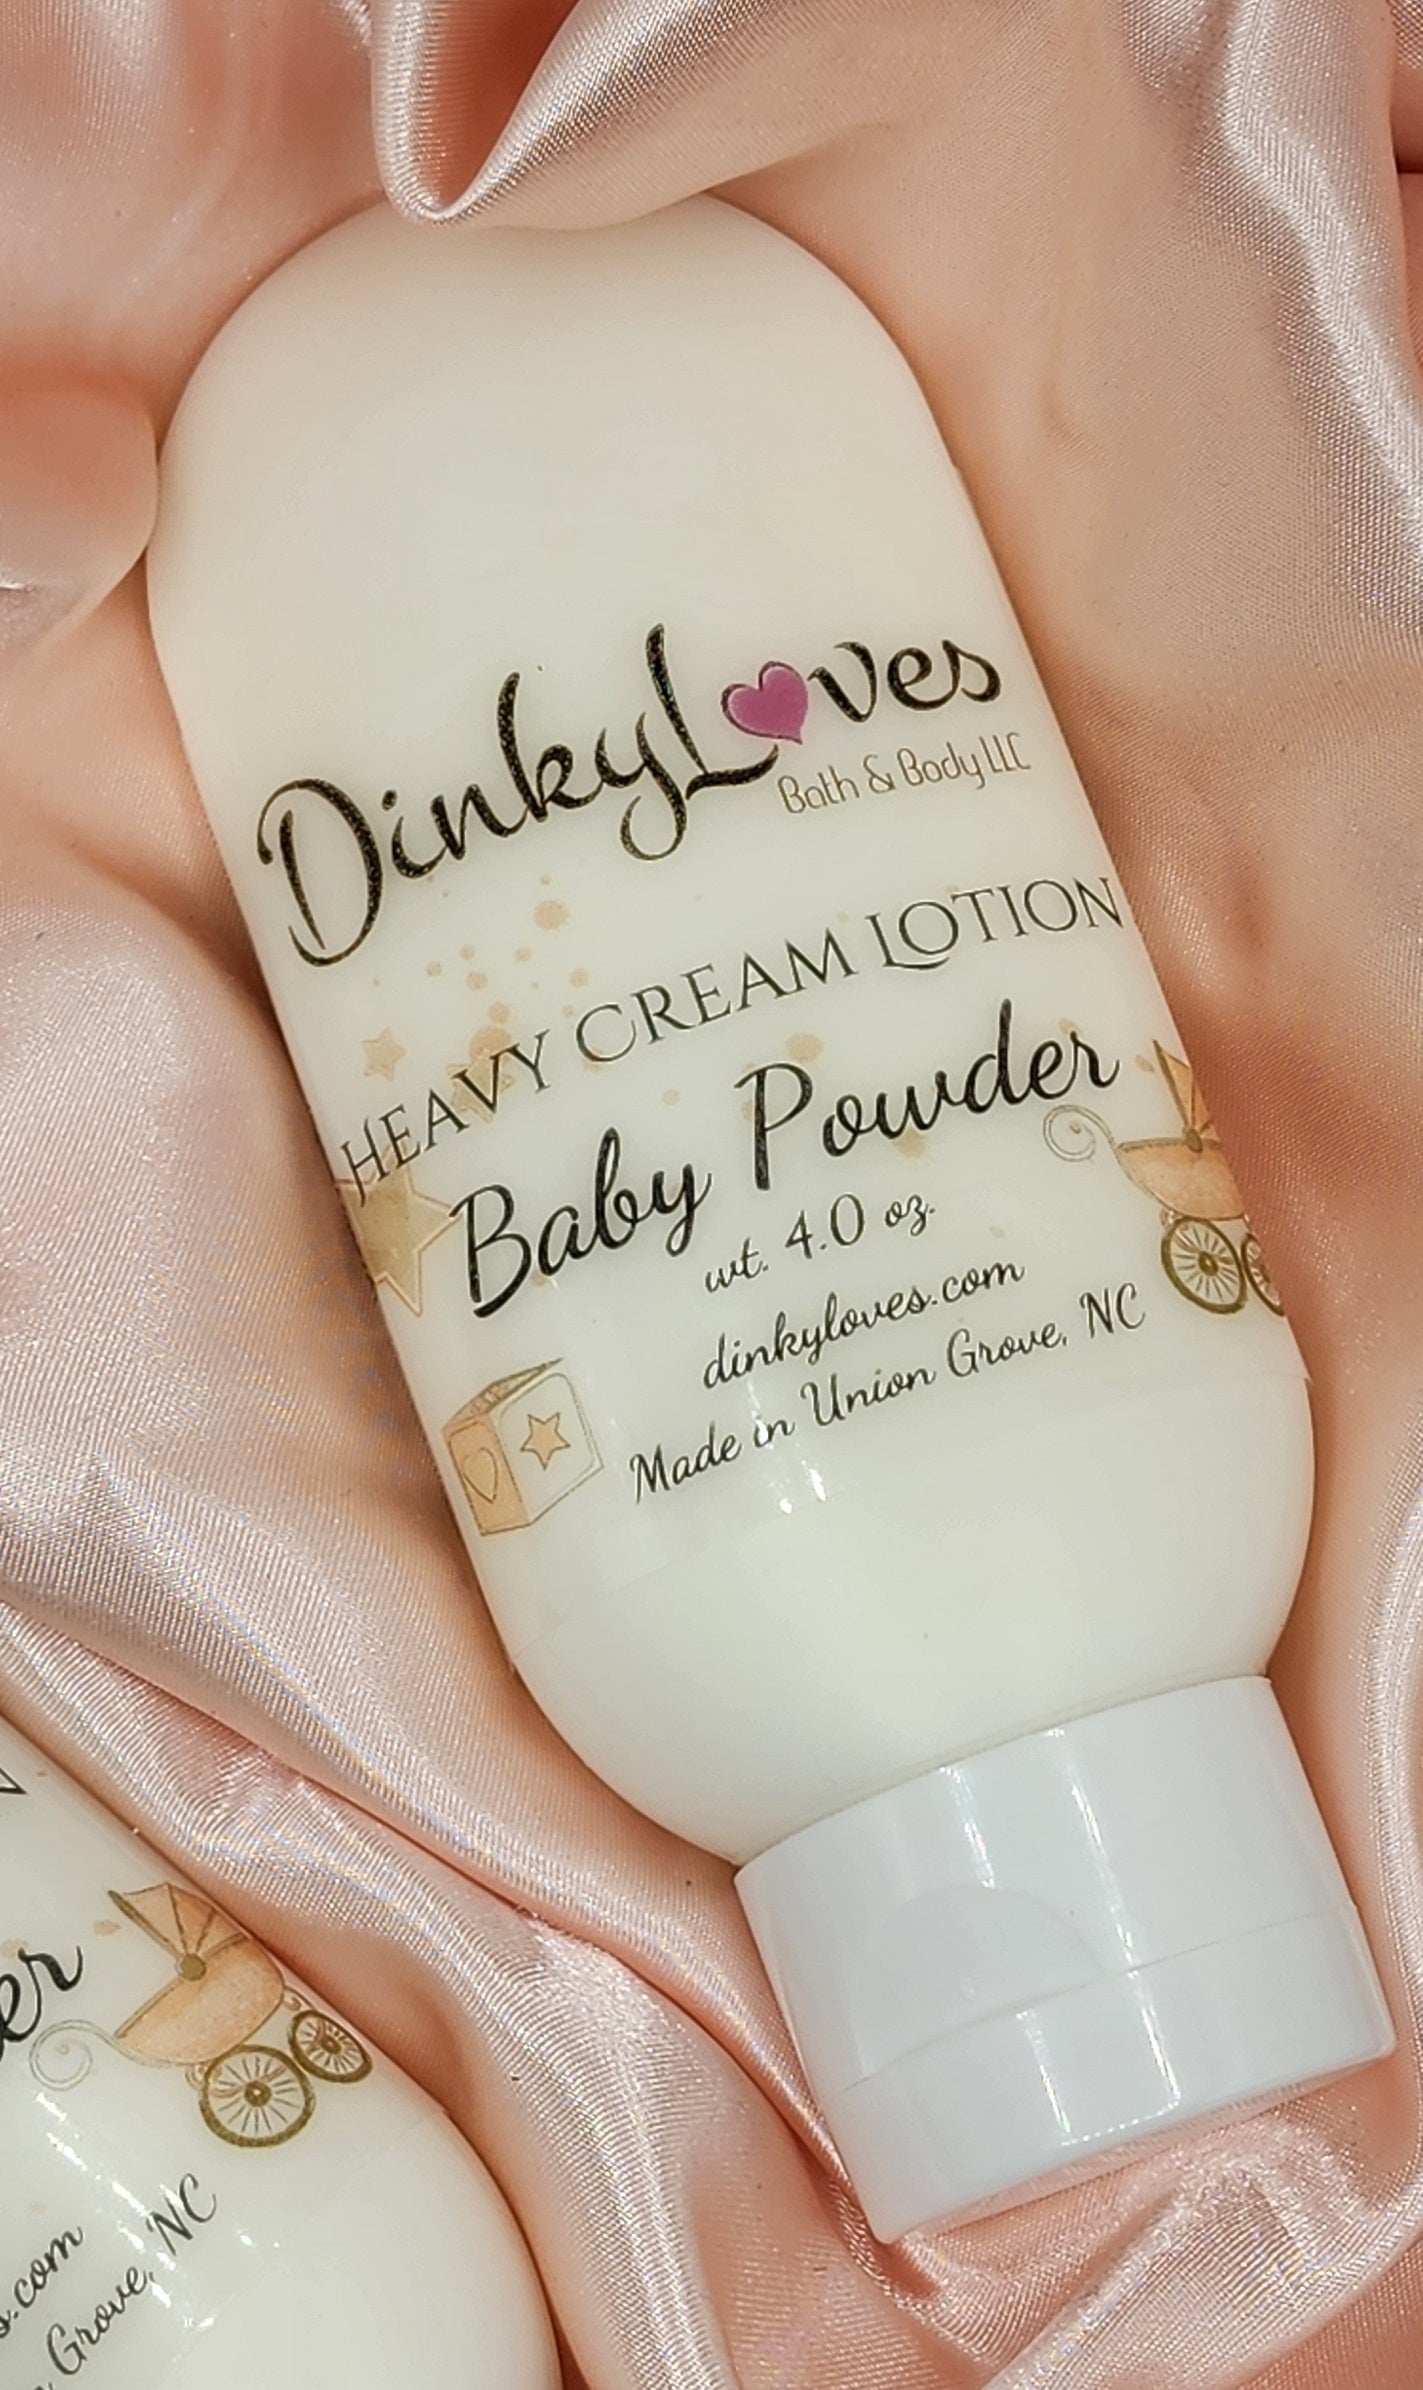 BABY POWDER Heavy Cream Lotion / Handmade Lotion / Creamy Lotion / Purse Size Lotion